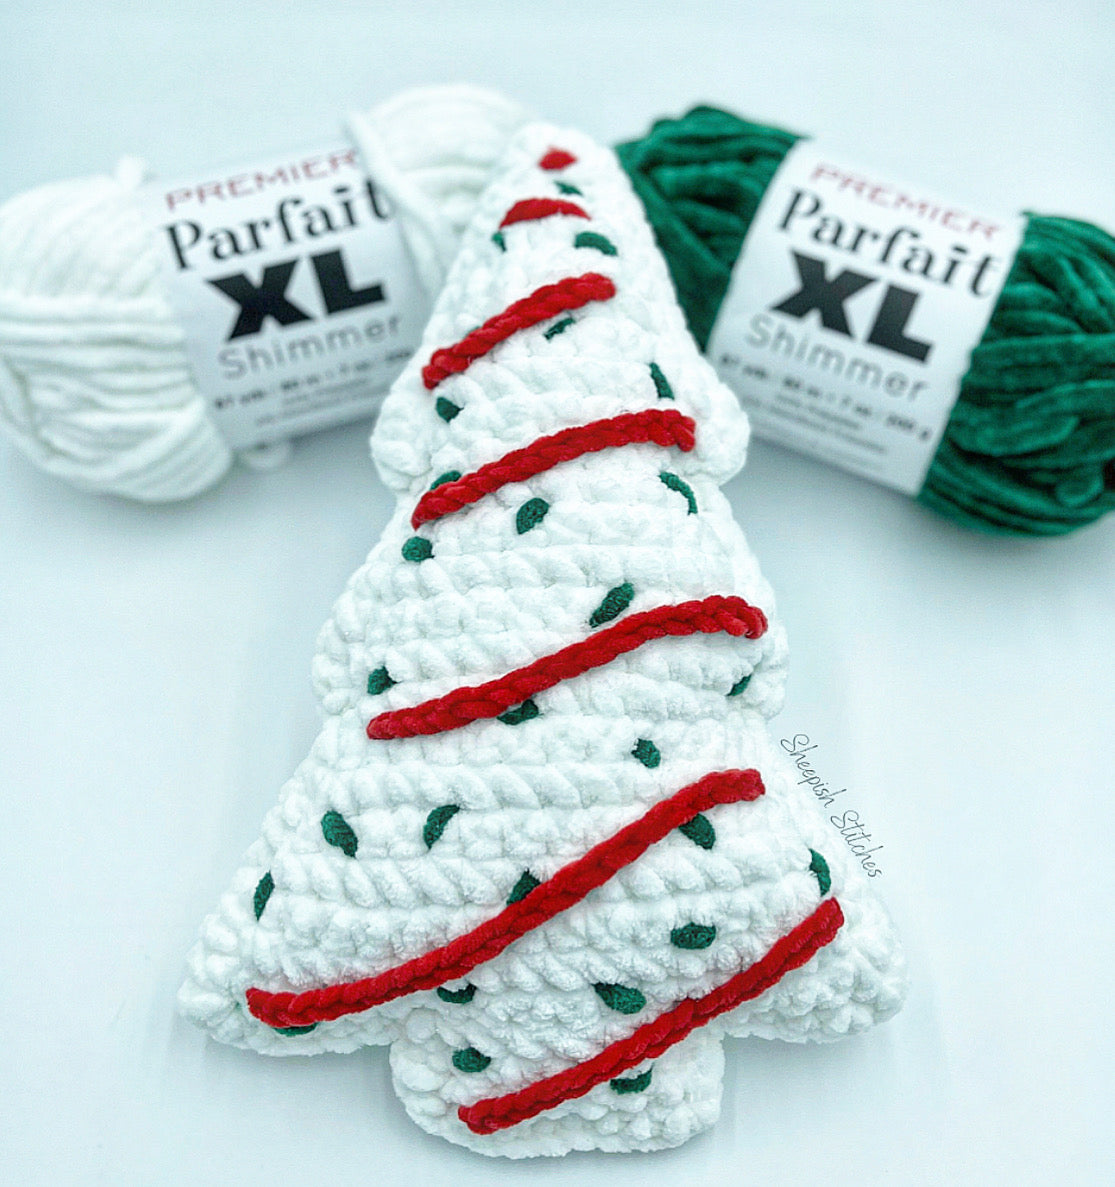 Crochet a Little Christmas - Yarn